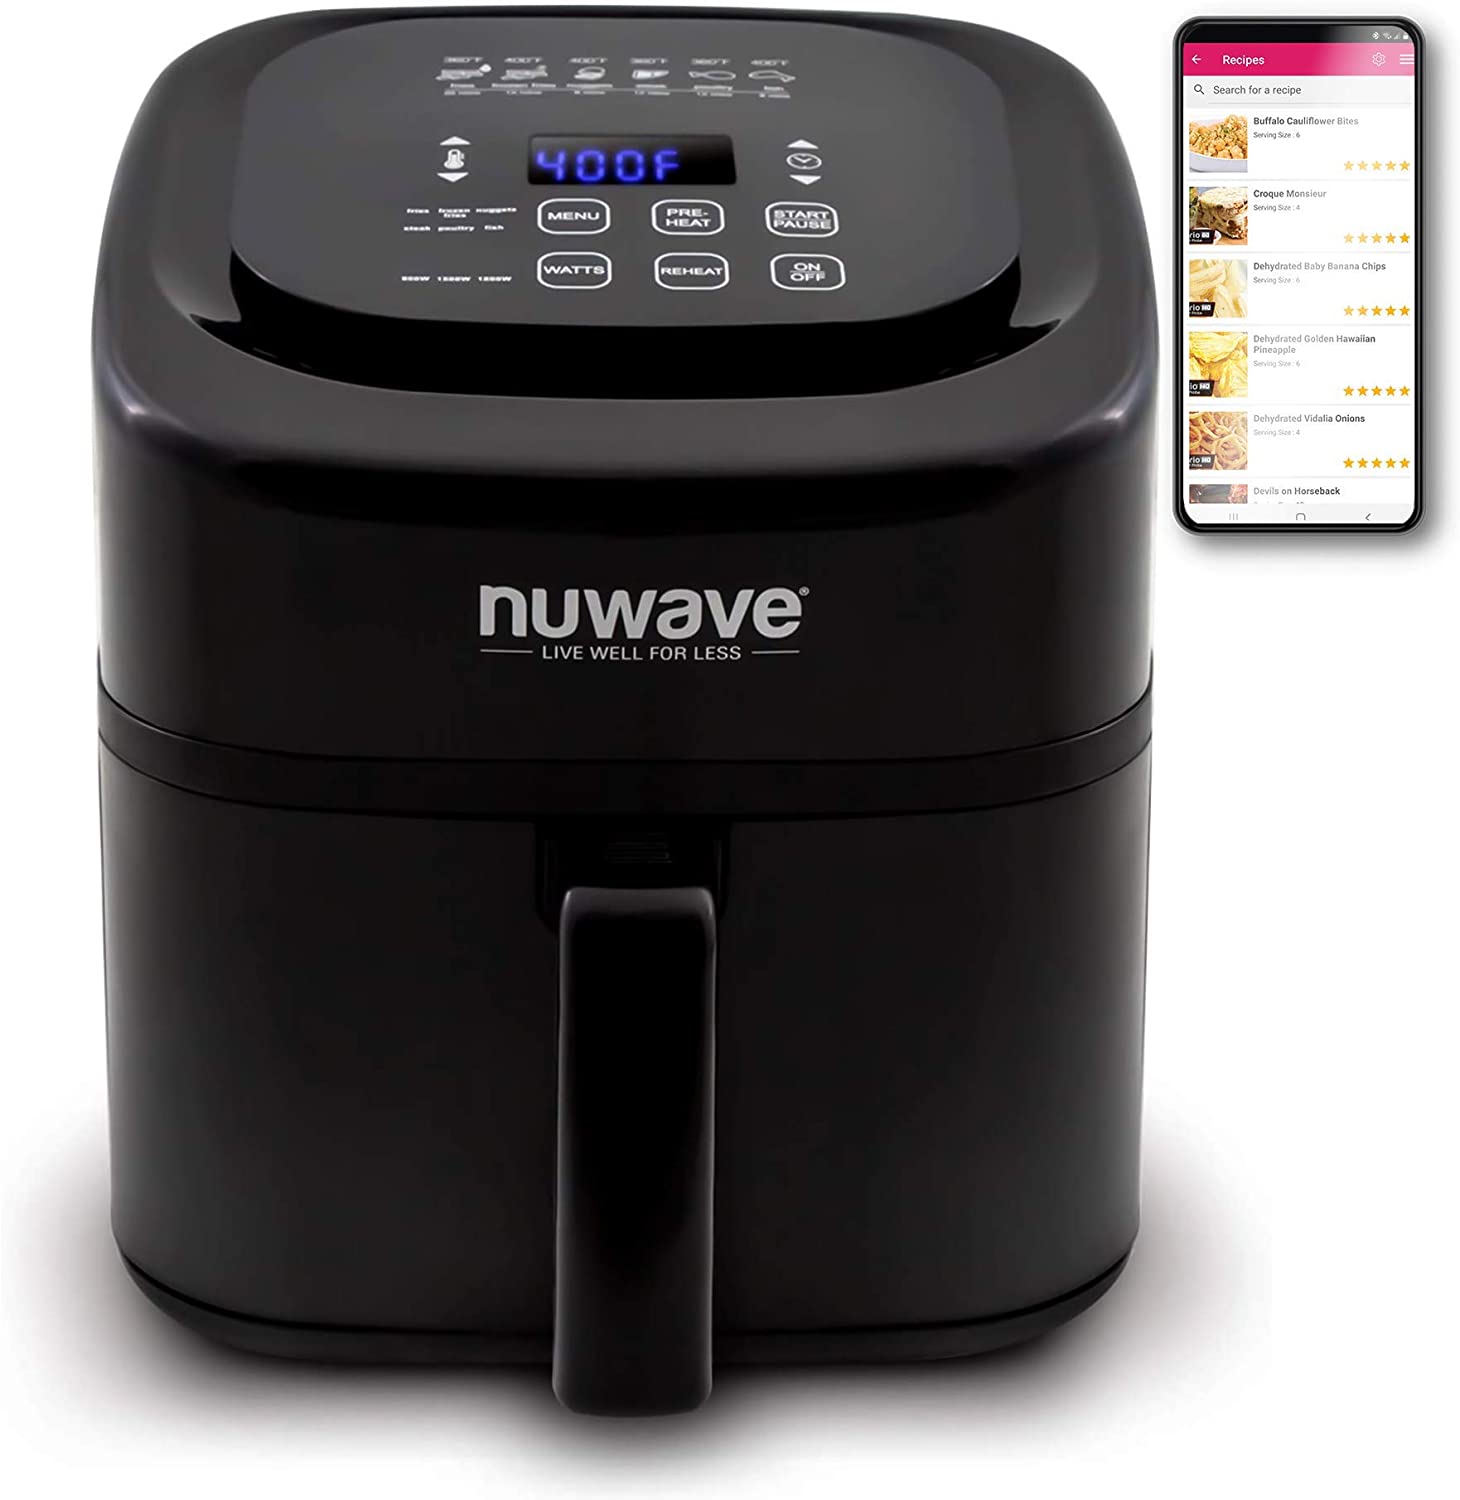 NuWave NW37031R 6 Qt Air Fryer Certified Refurbished